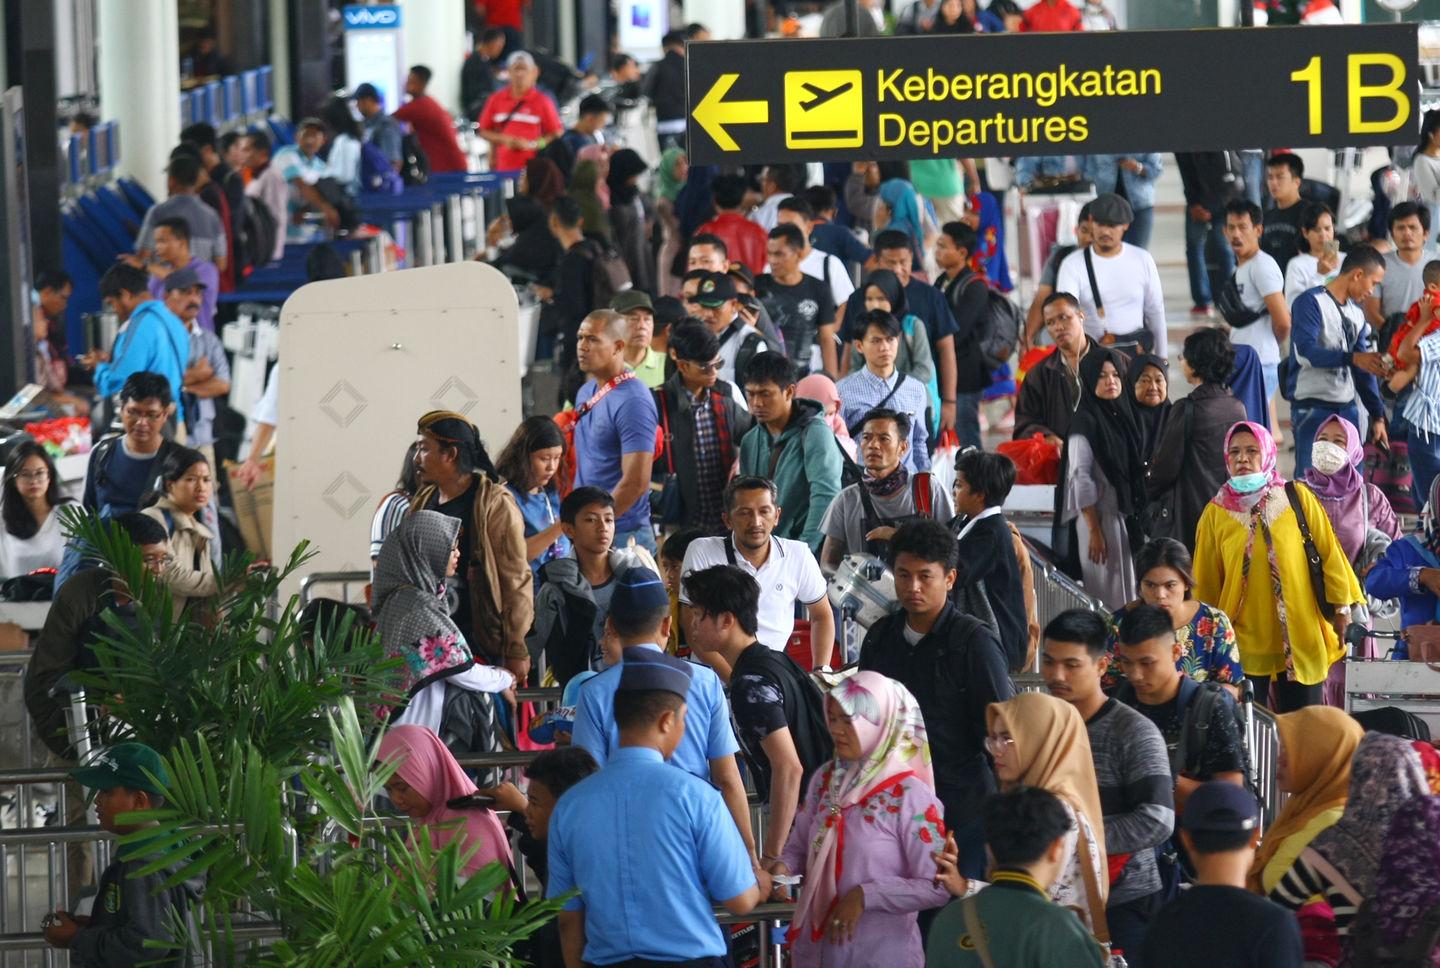 Ribuan calon penumpang antre masuk ke dalam terminal untuk lapor diri atau chek in di Termial 1 B Bandara Soekarno Hatta, Tangerang, Banten, Minggu (23/12/2018). | Muhammad Iqbal /Antara Foto